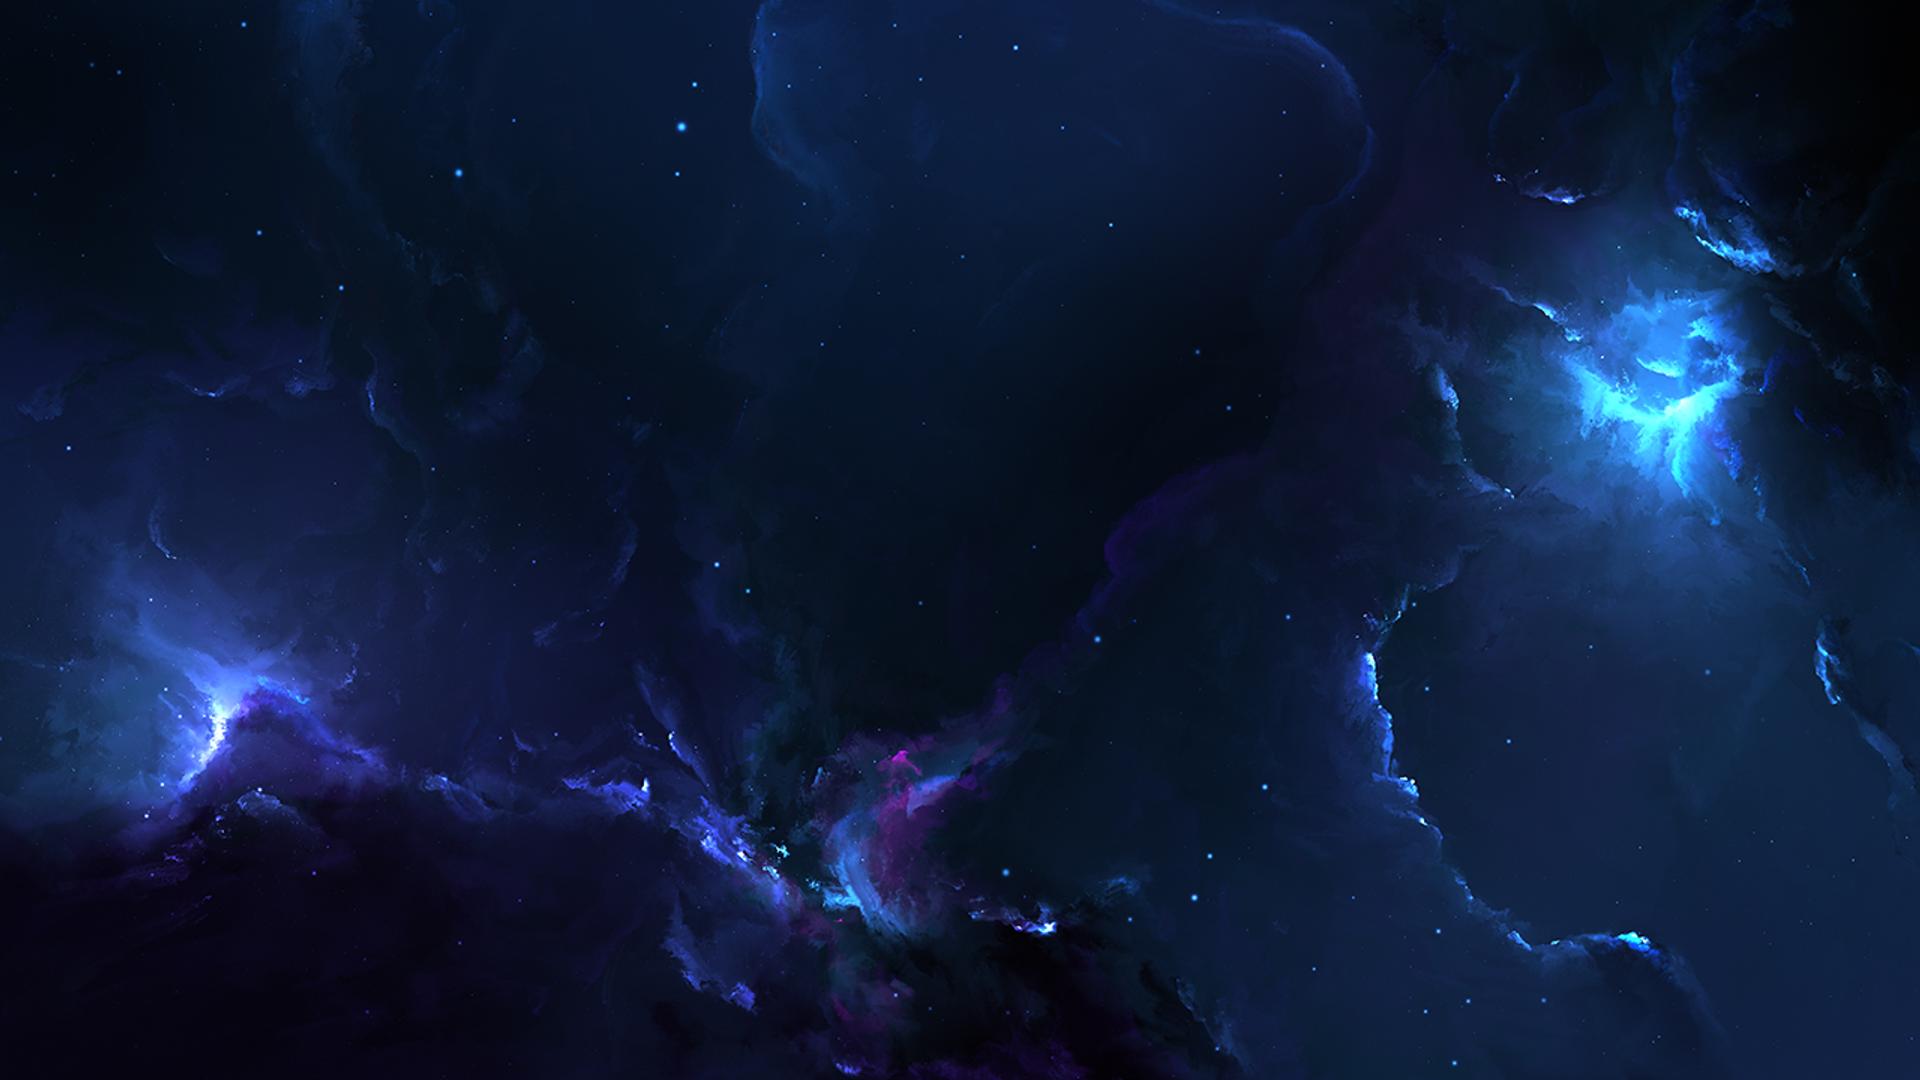 Abstract dark sky with blue light - Fantasy wallpaper